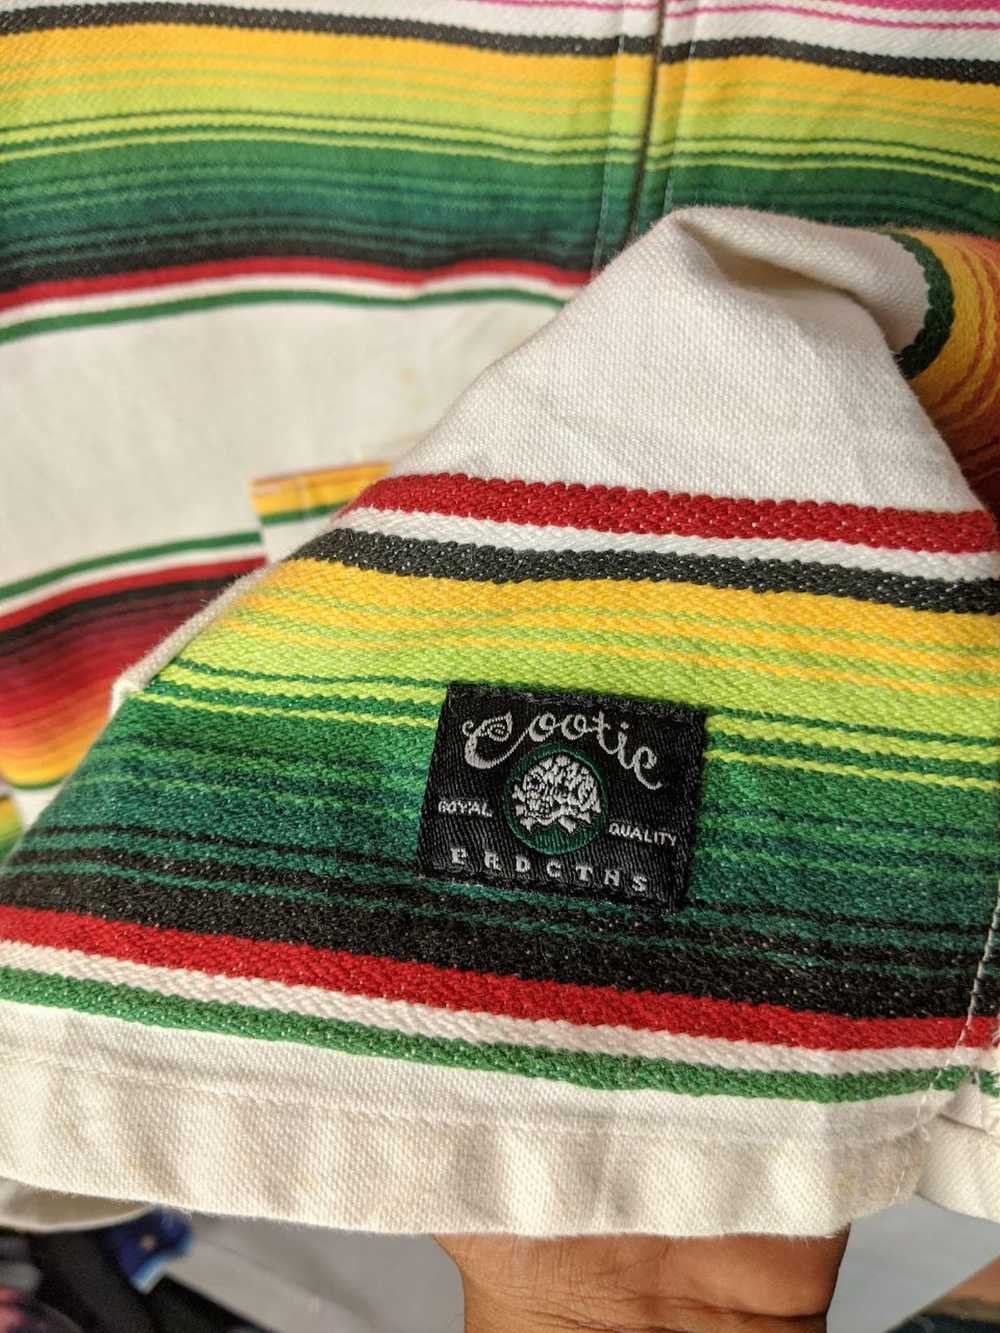 Japanese Brand cootie production rainbow jacket - image 6